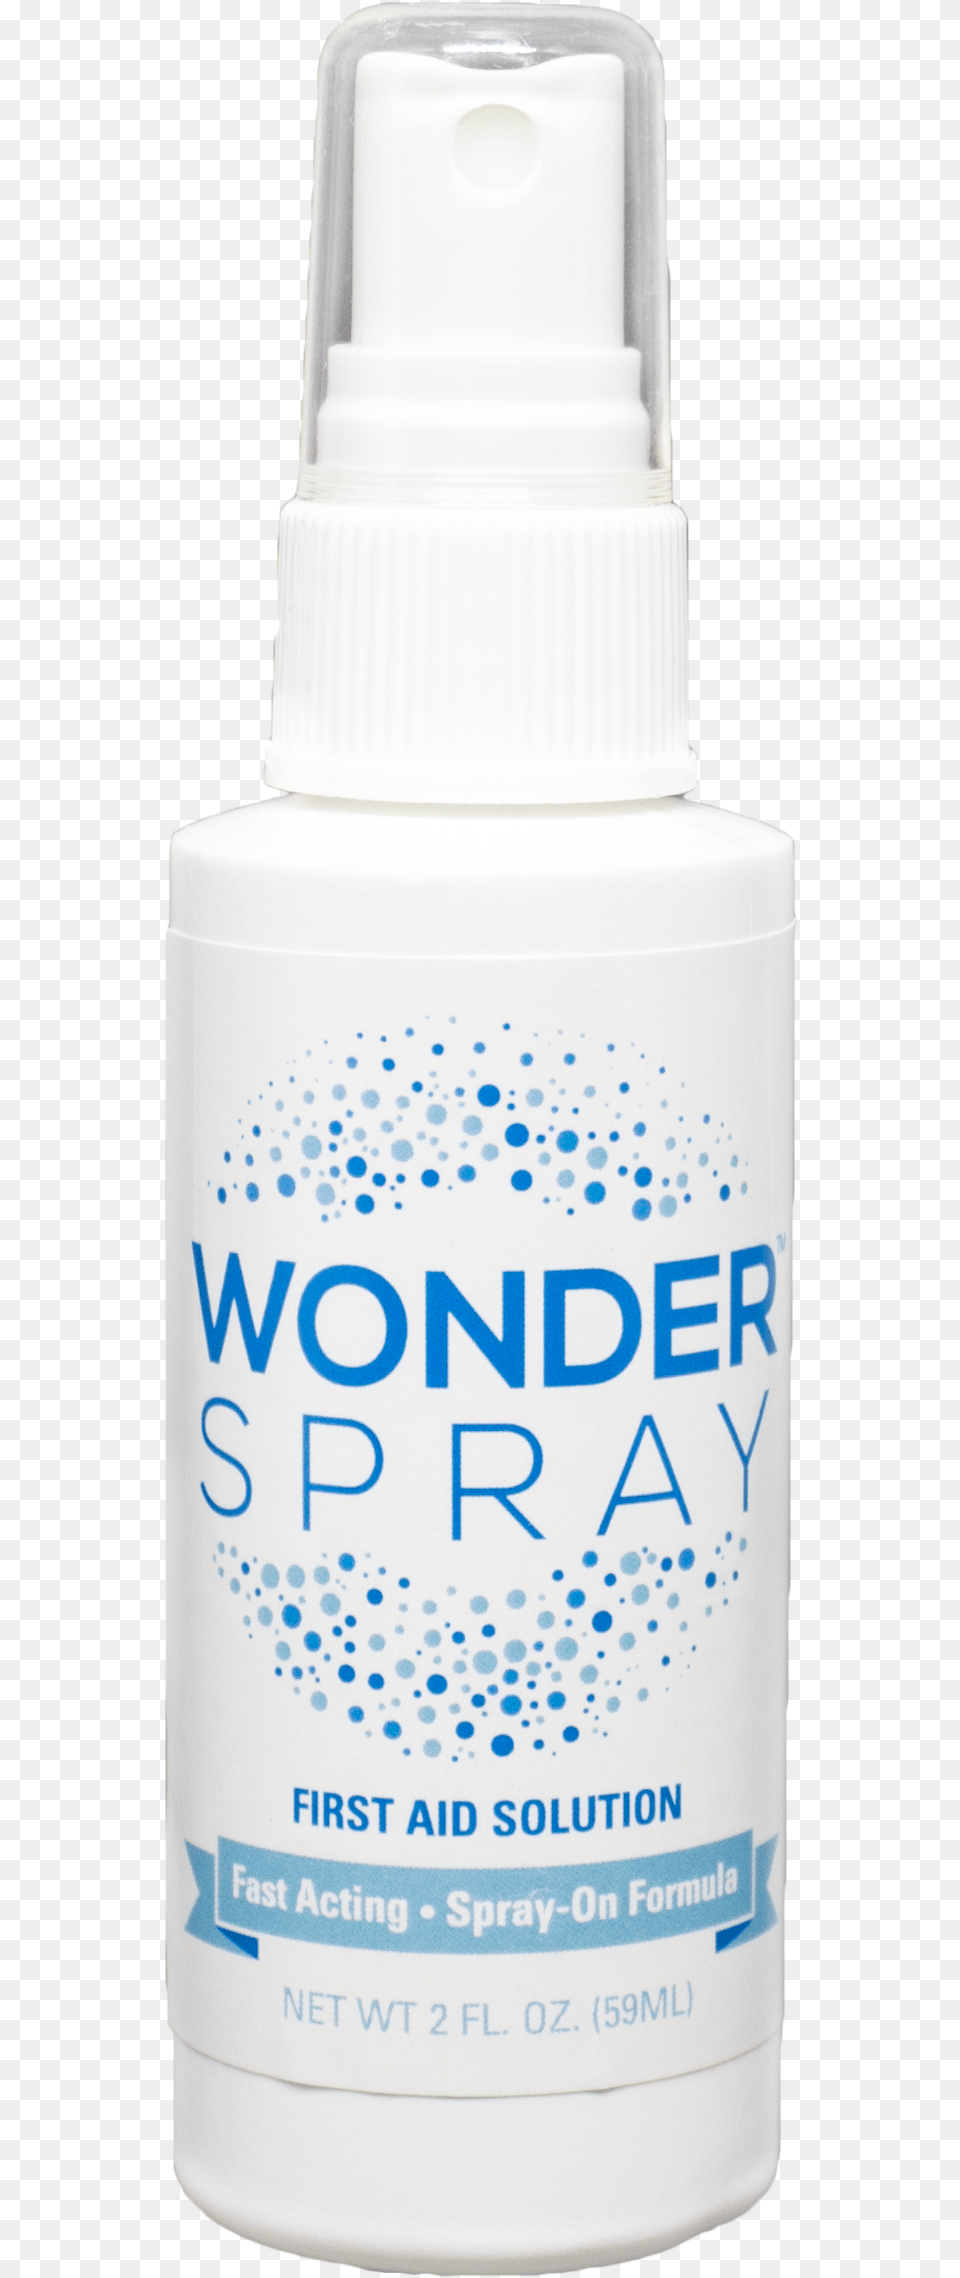 Wonder Spray First Aid Solution Plastic Bottle, Cosmetics, Deodorant, Beverage, Milk Png Image